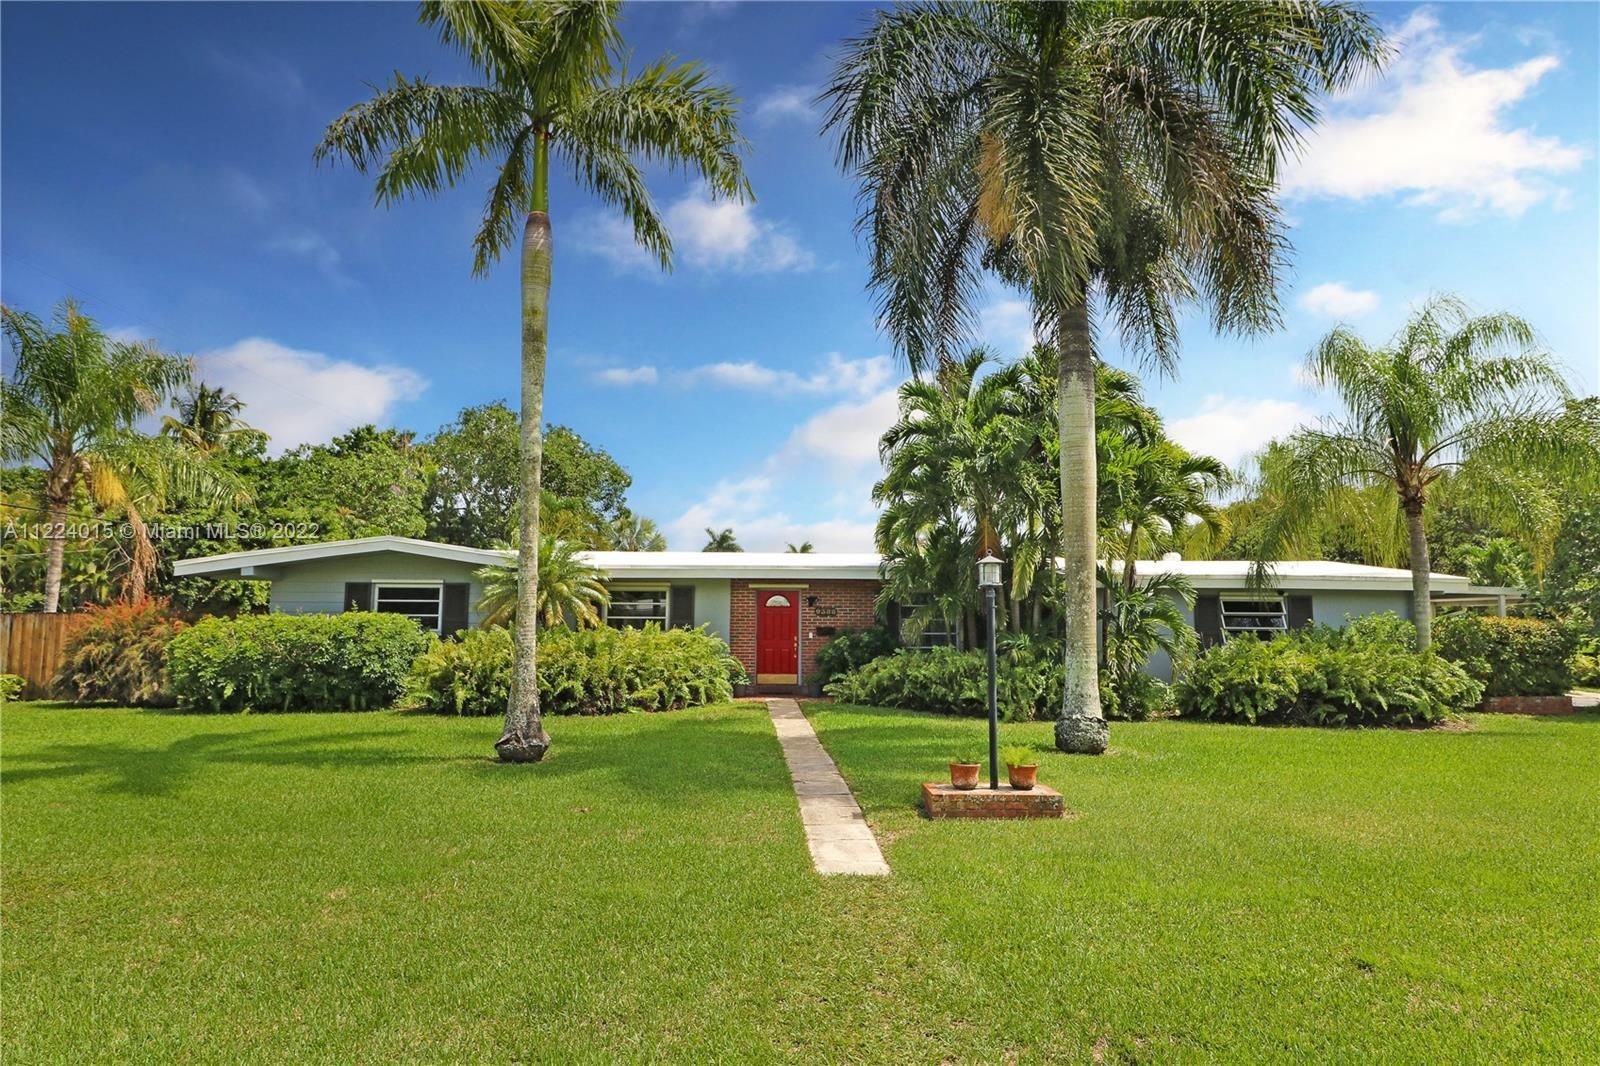 Real estate property located at 9388 178th St, Miami-Dade County, Palmetto Bay, FL